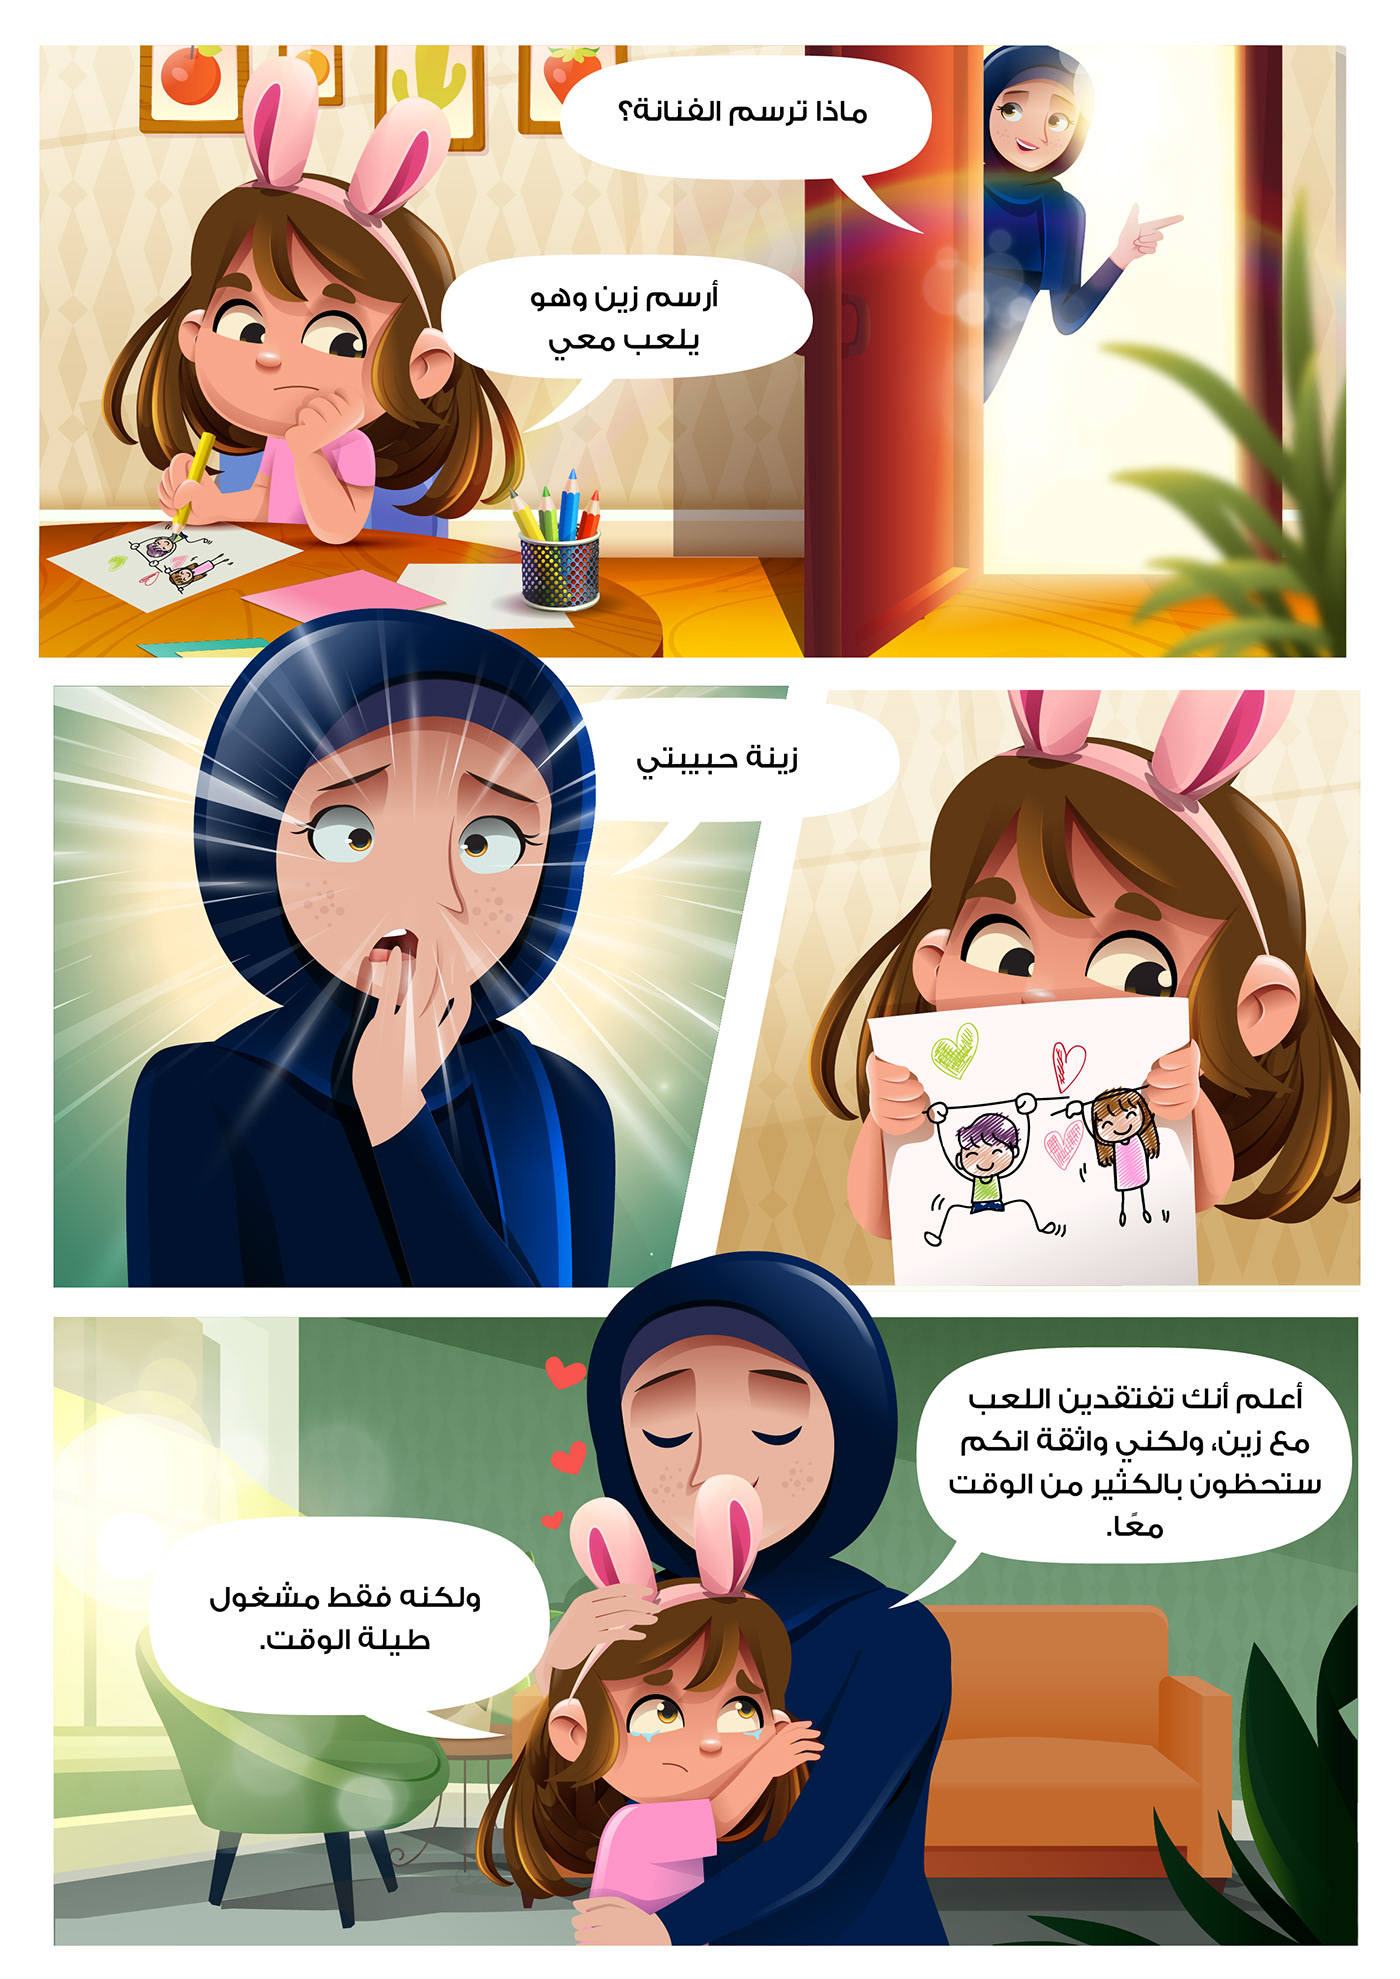 serag basel سراج باسل Arab kids Character design  Saudi Arabia kids story children illustration children's book digital illustration muslim character